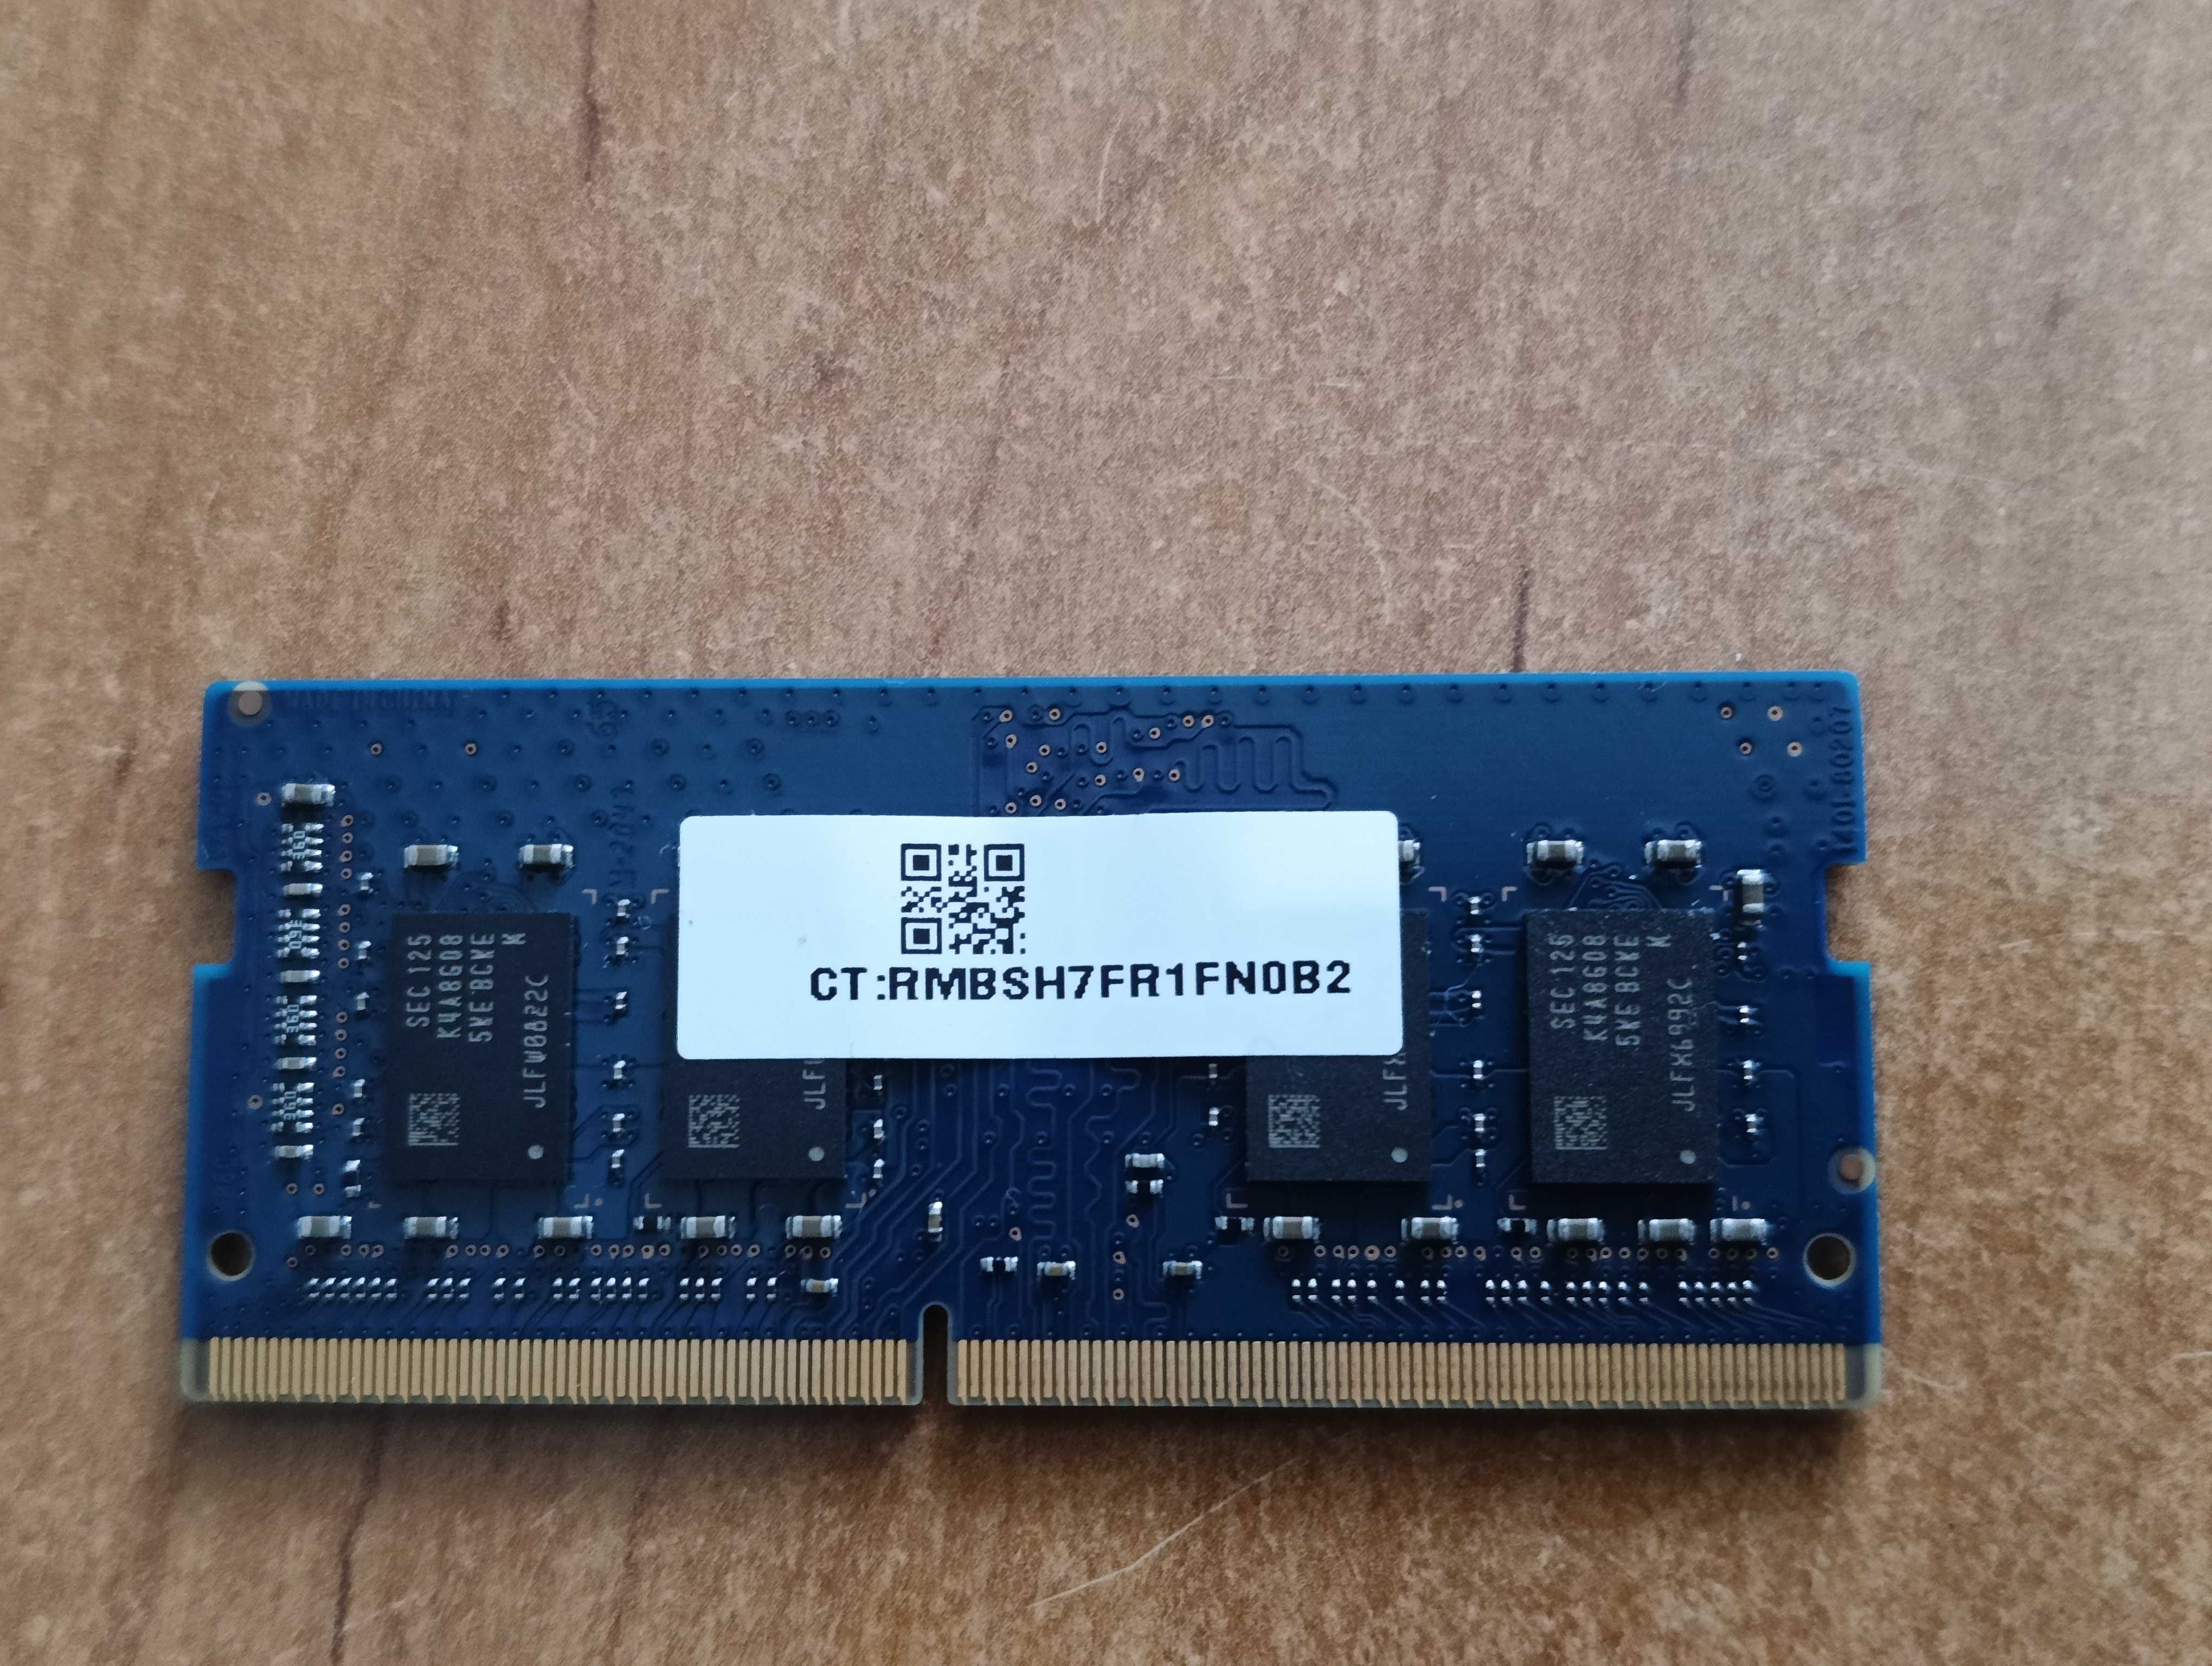 Pamięć RAM DDR4 Ramaxel -3200